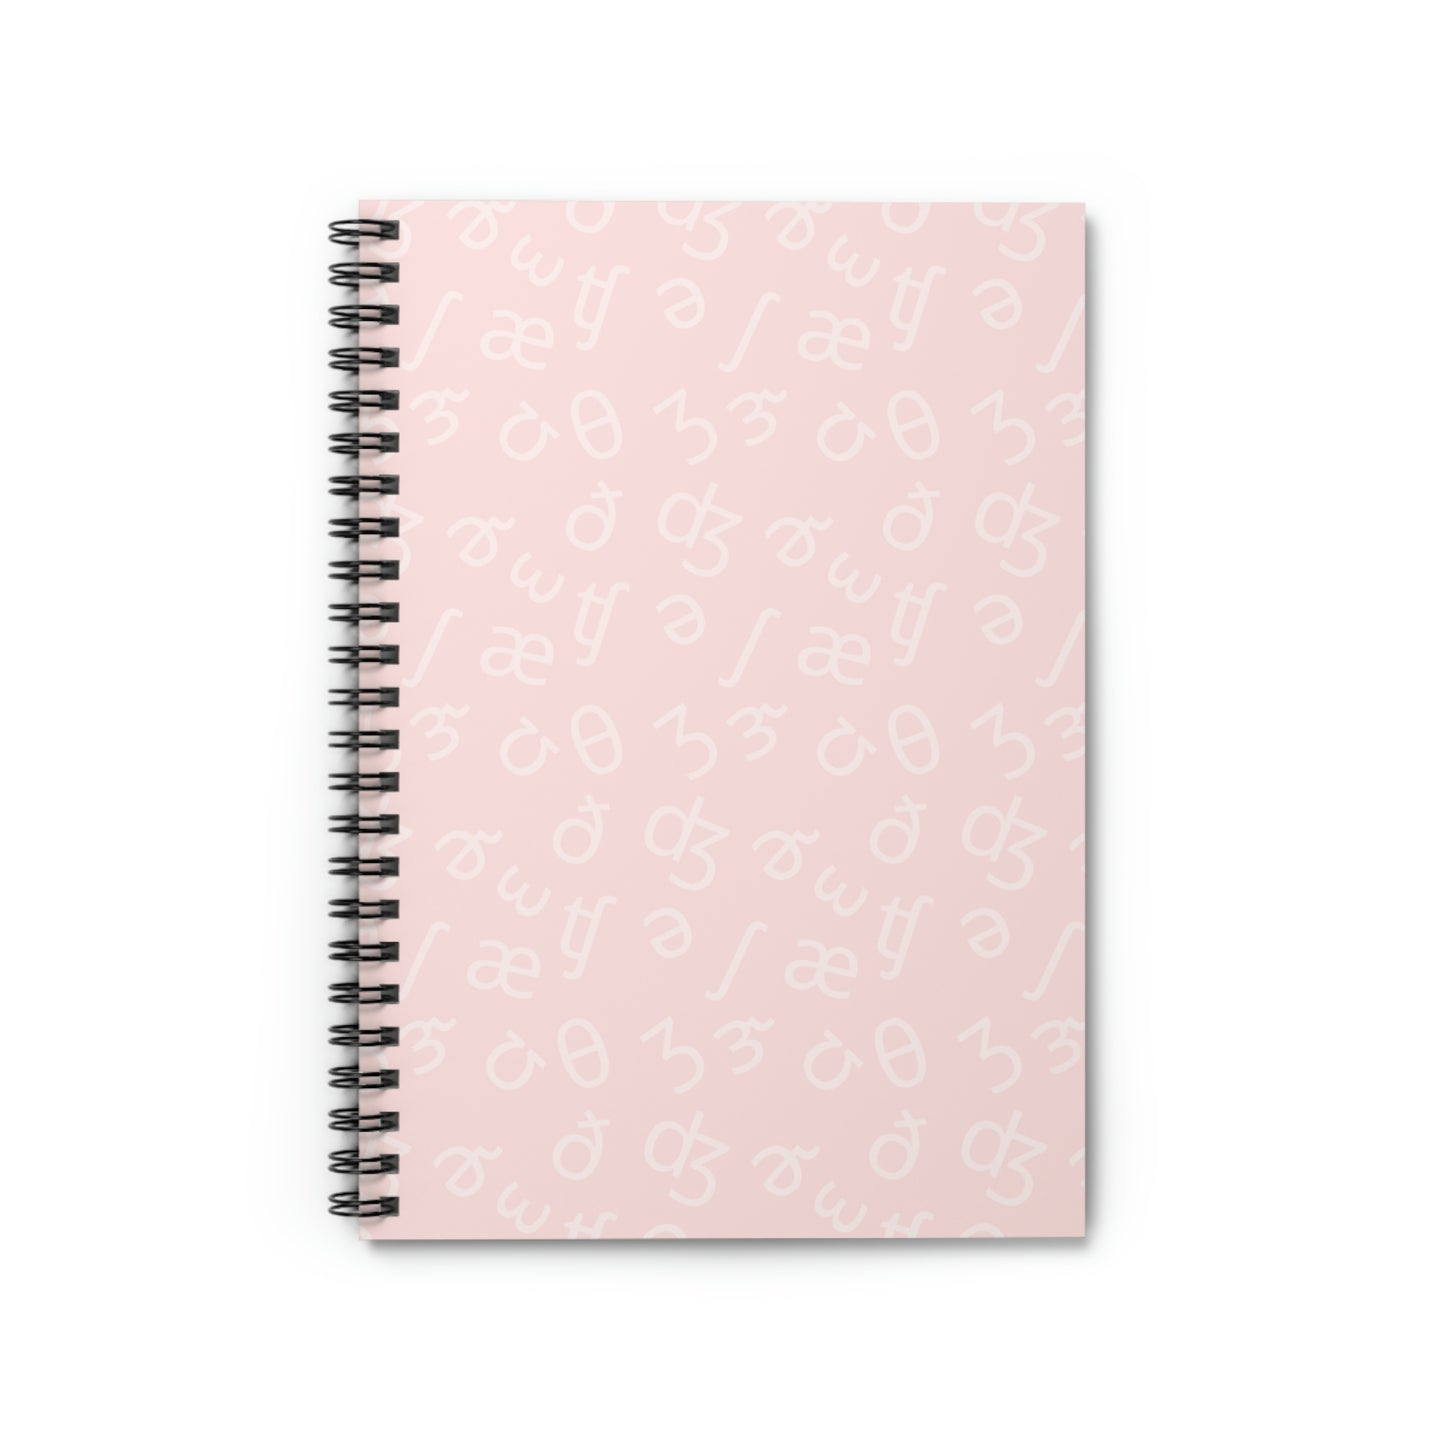 IPA Notebook